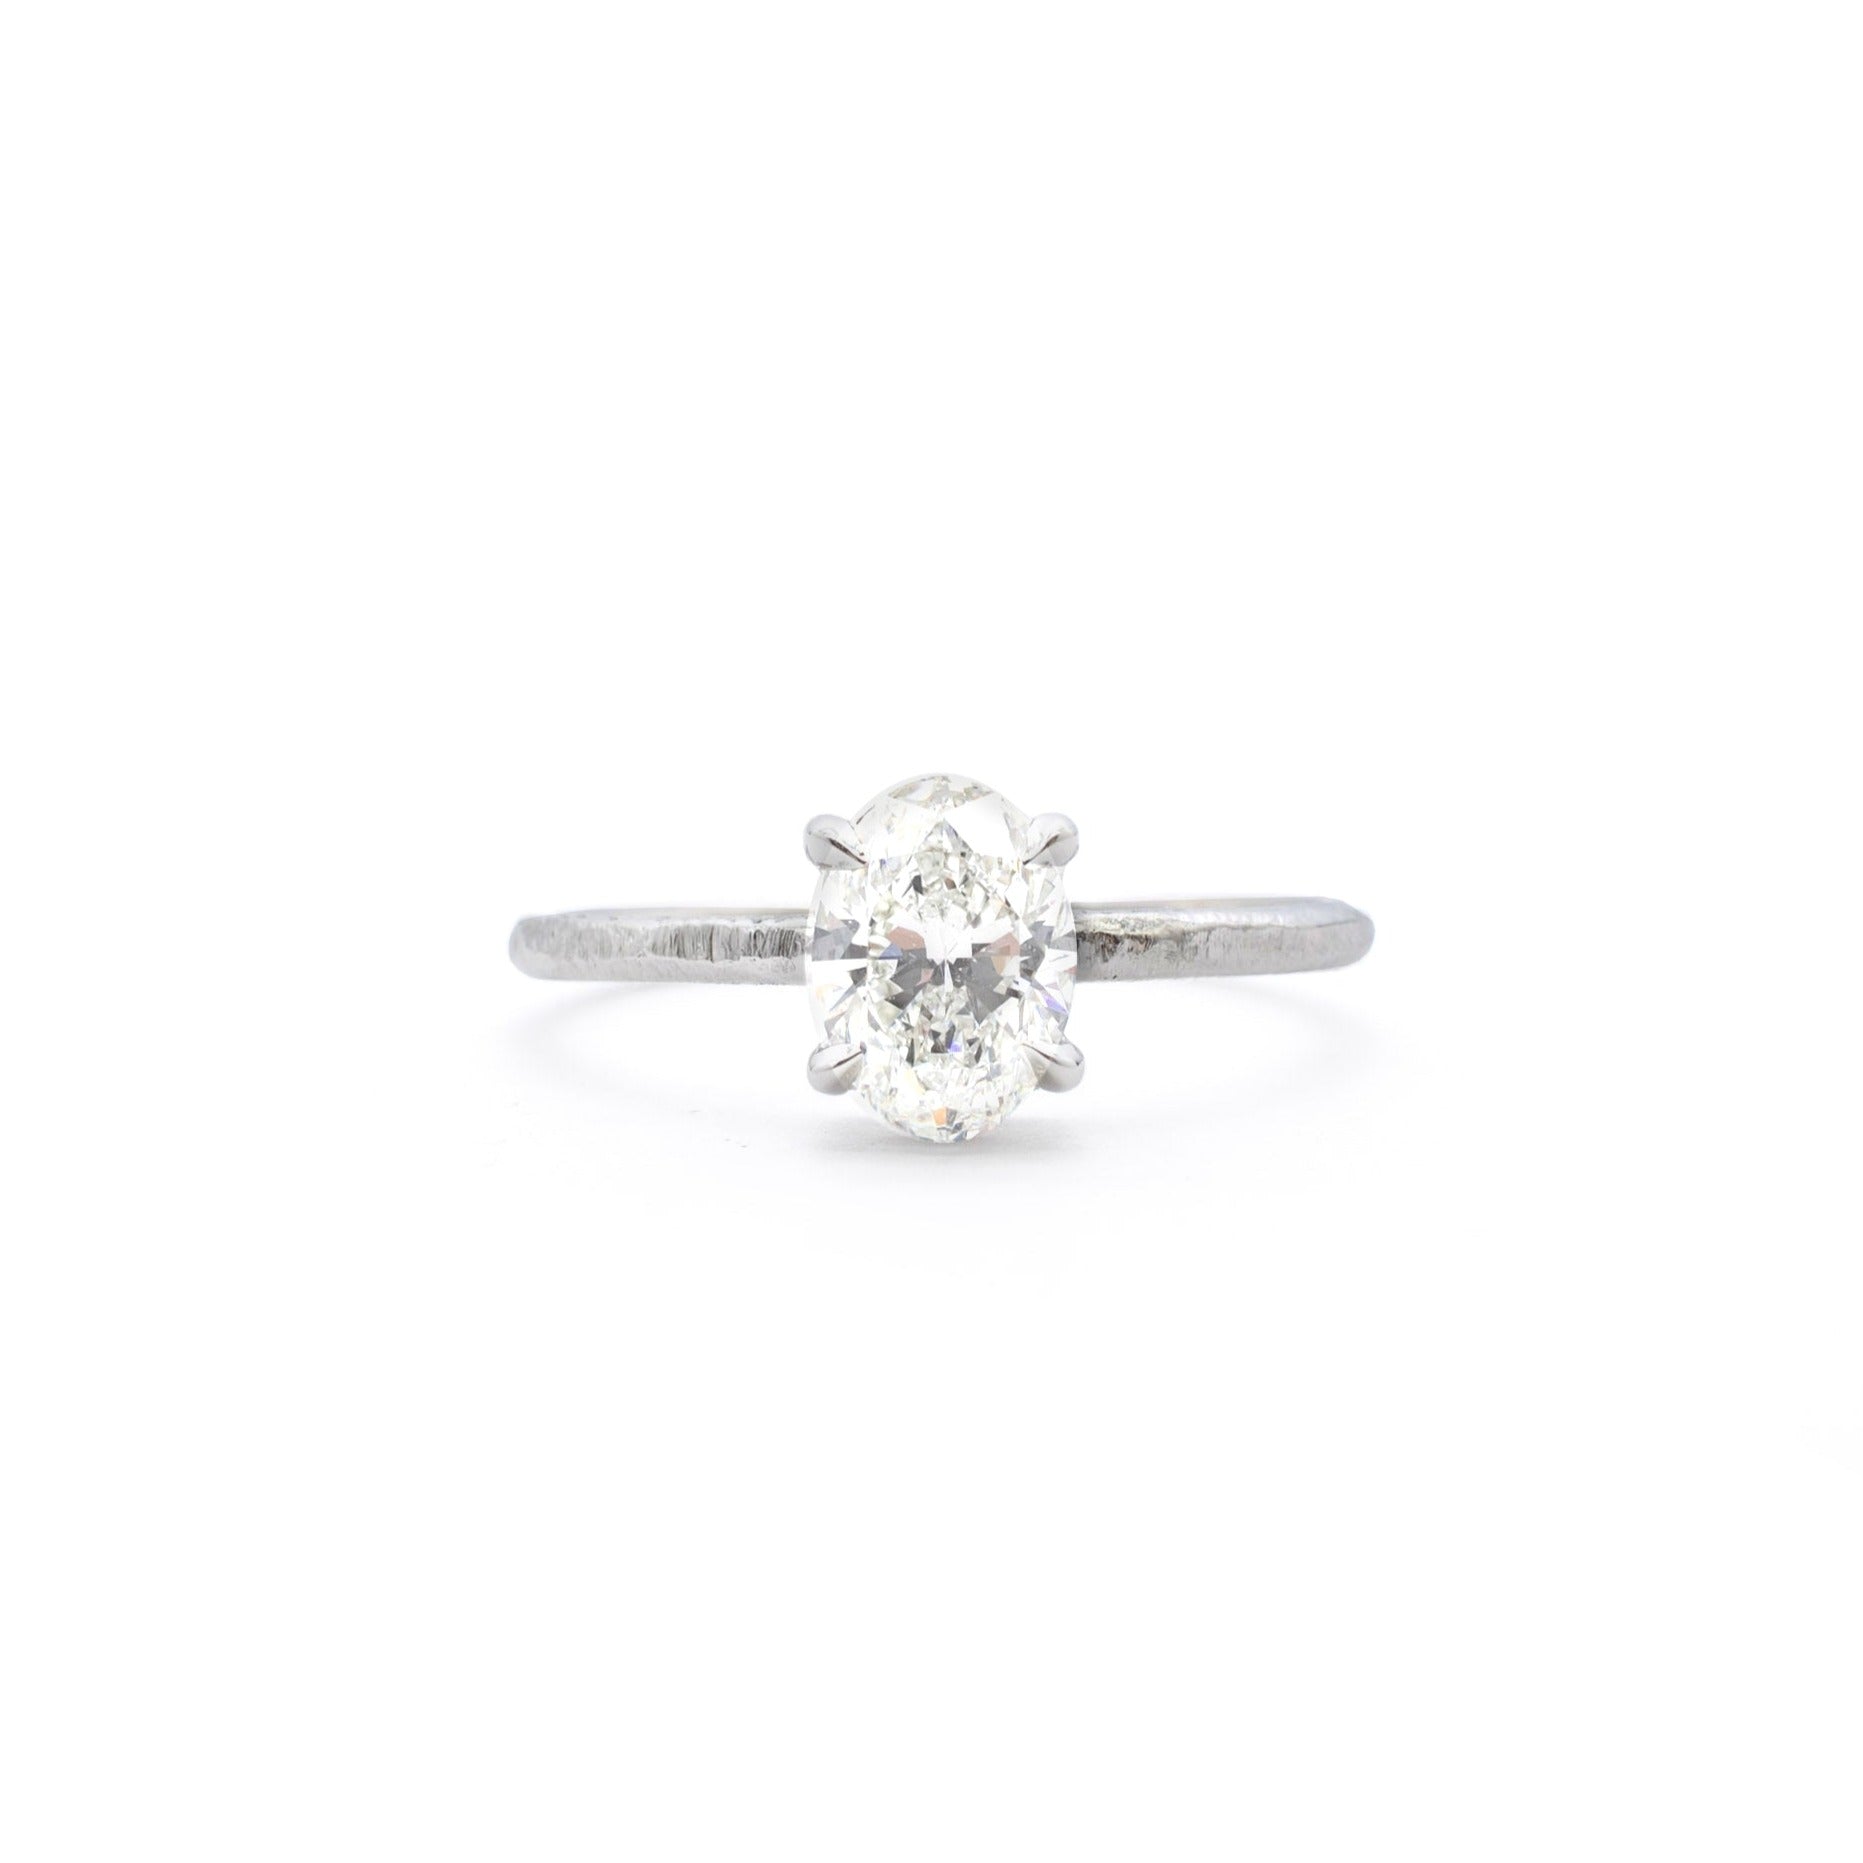 Handmade platinum engagement ring with oval diamond